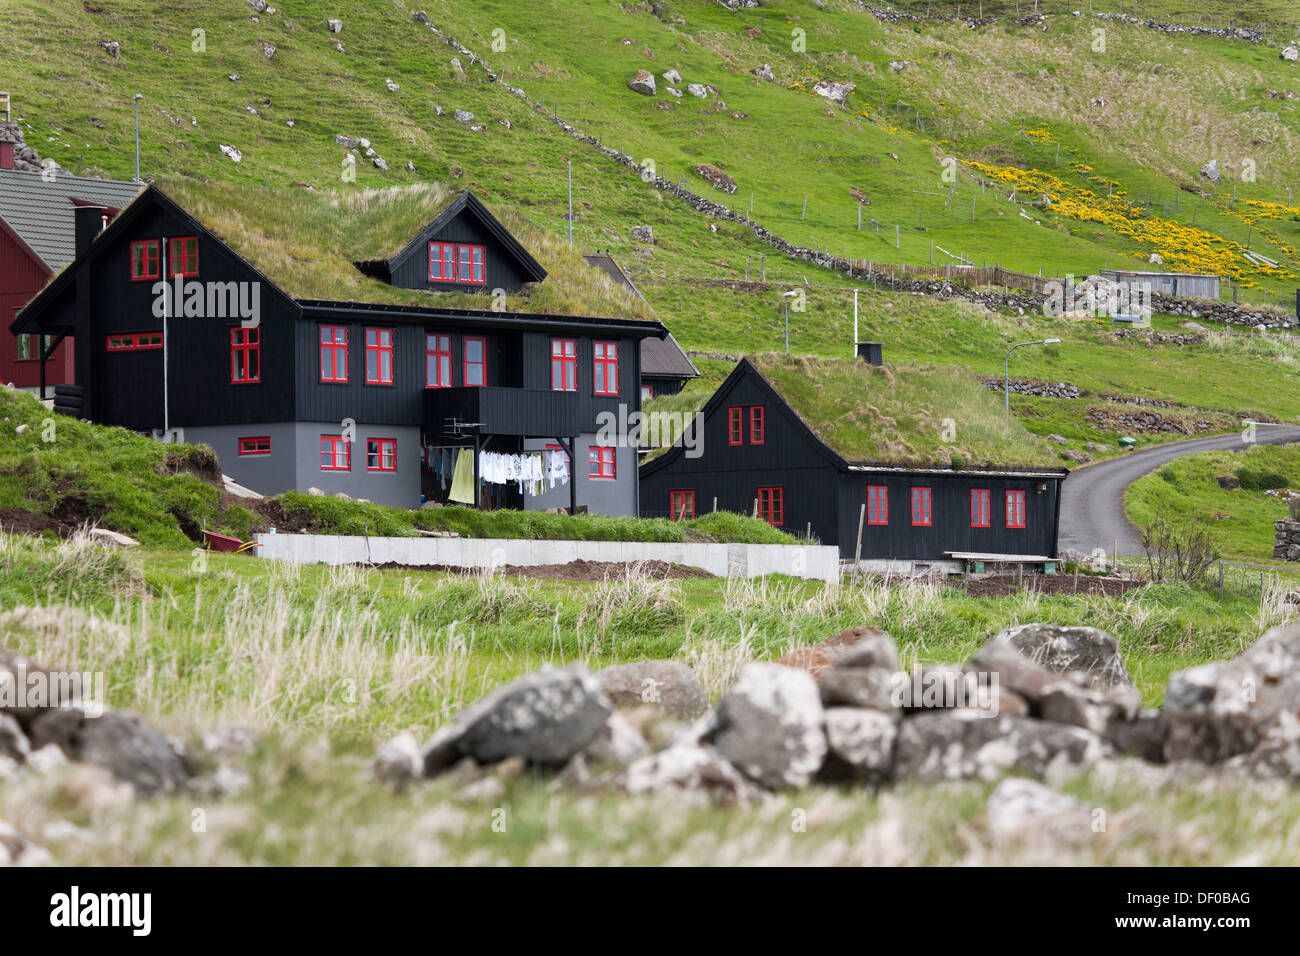 Wooden house with a grass roof, Kirkjubour, Streymoy Island, Faroe Islands, Denmark, North Atlantic, Northern Europe, Europe Stock Photo